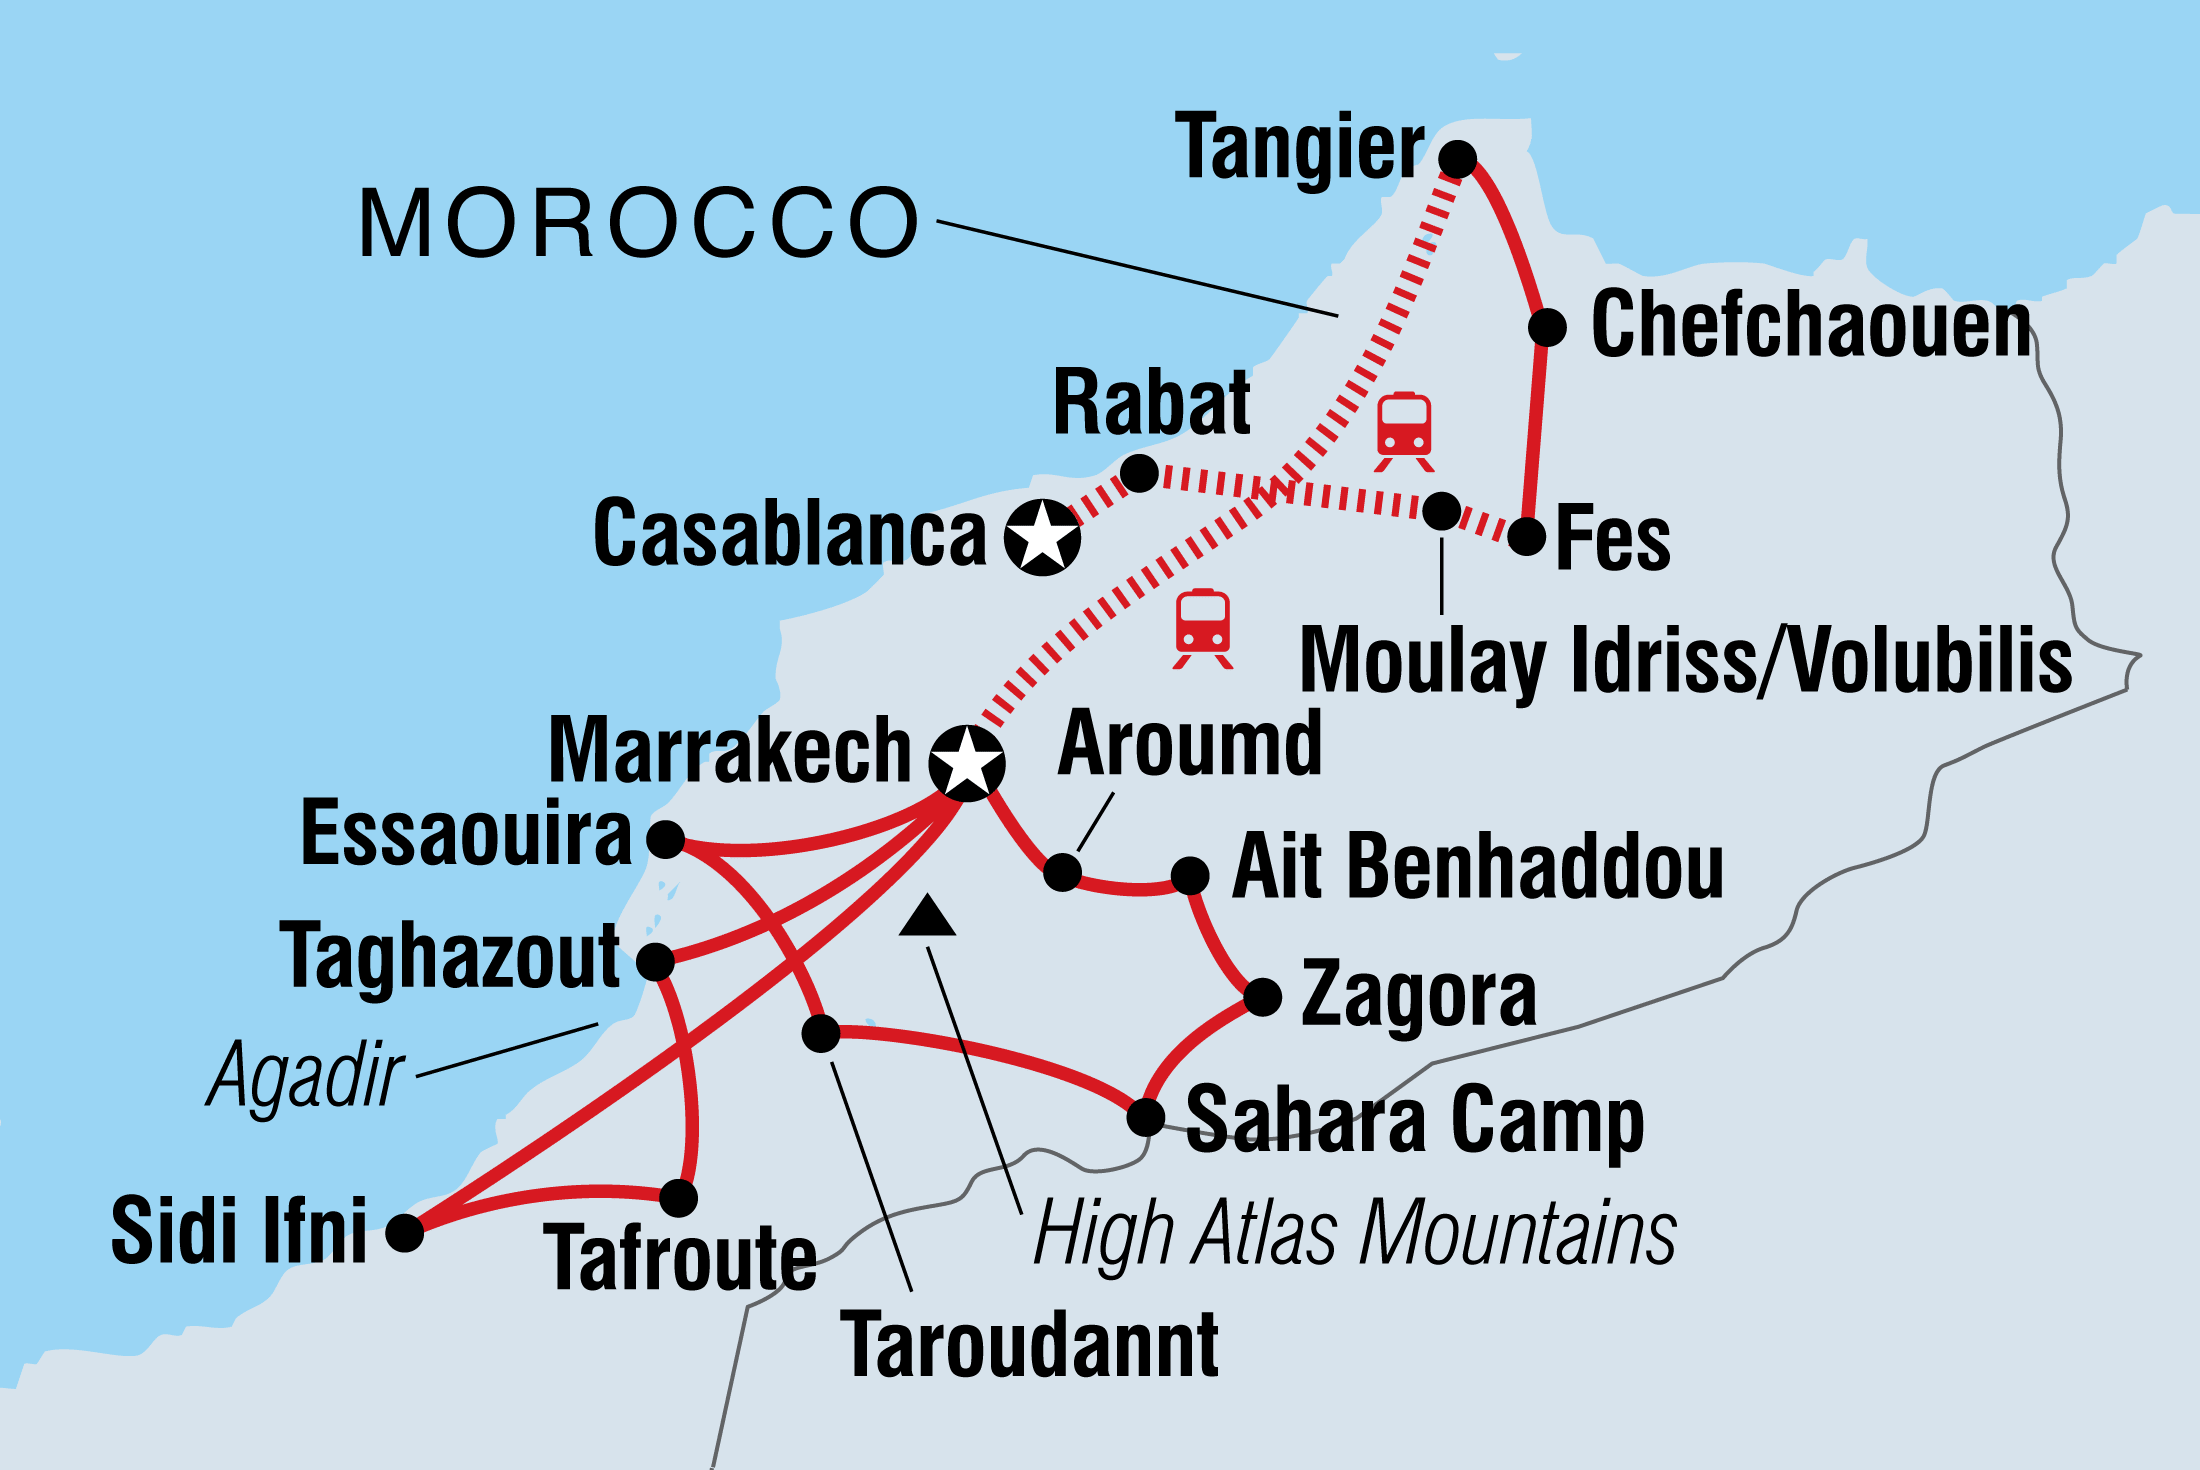 small group tour to morocco